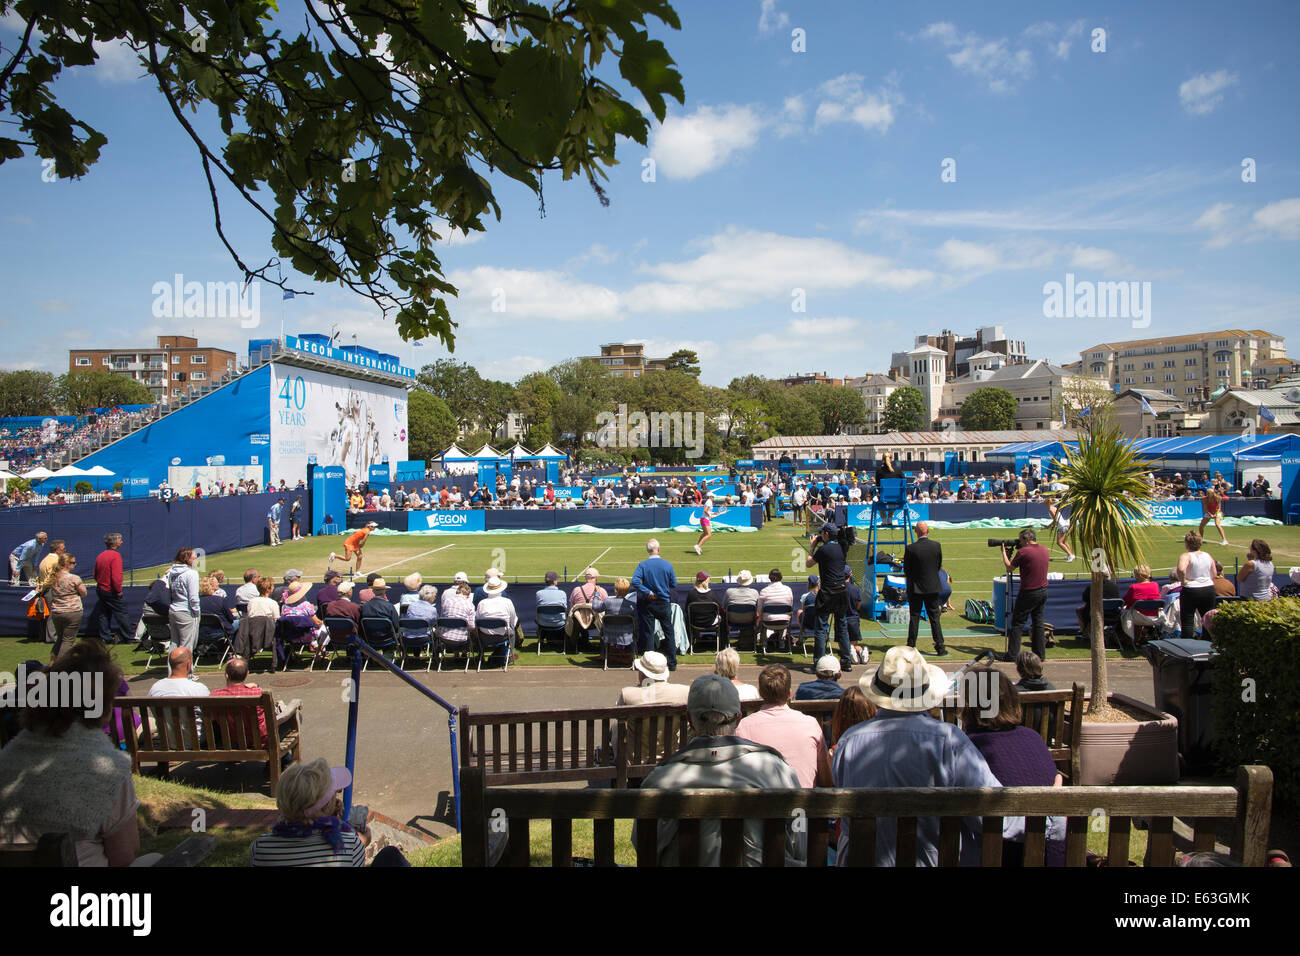 Aegon International Tennis Championships, Devonshire Park, in Eastbourne, East Sussex, England, UK Stock Photo